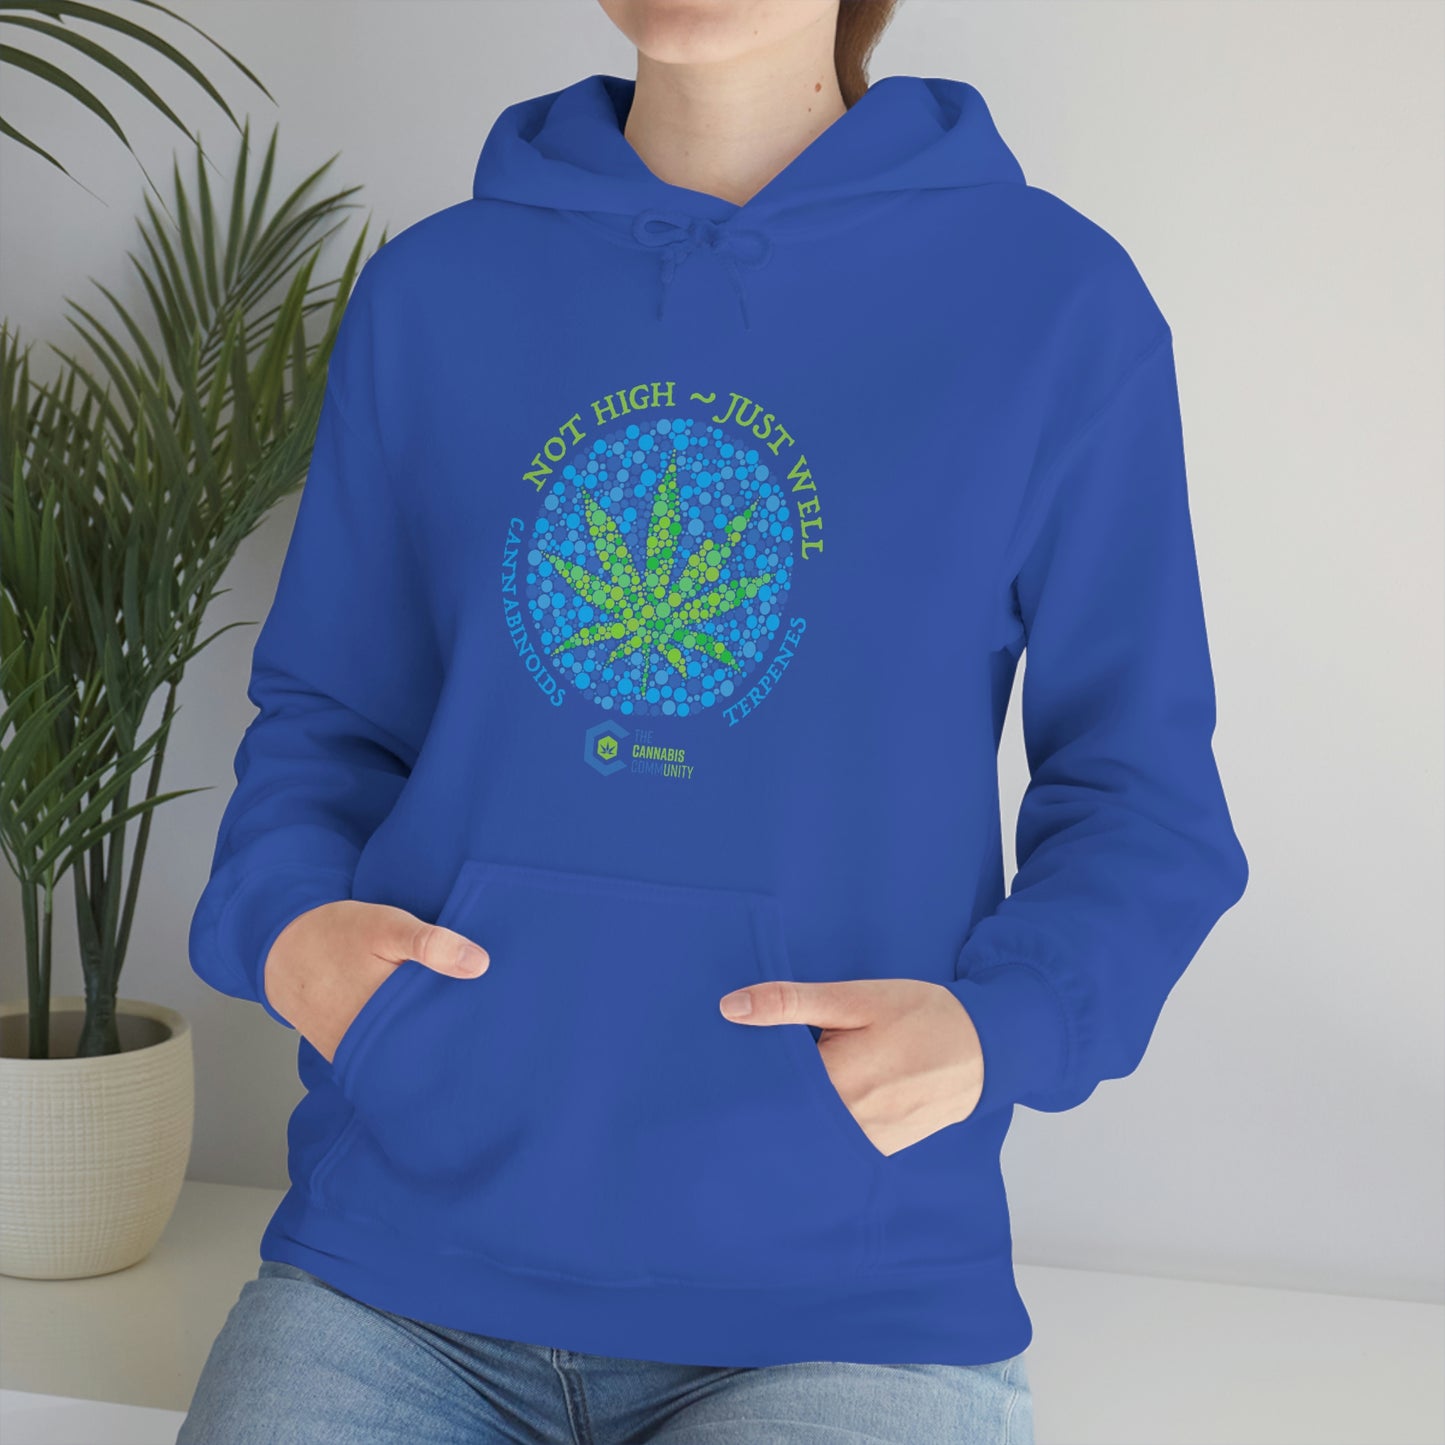 a woman wearing a blue Not High, Just Well Cannabis Hoodie.